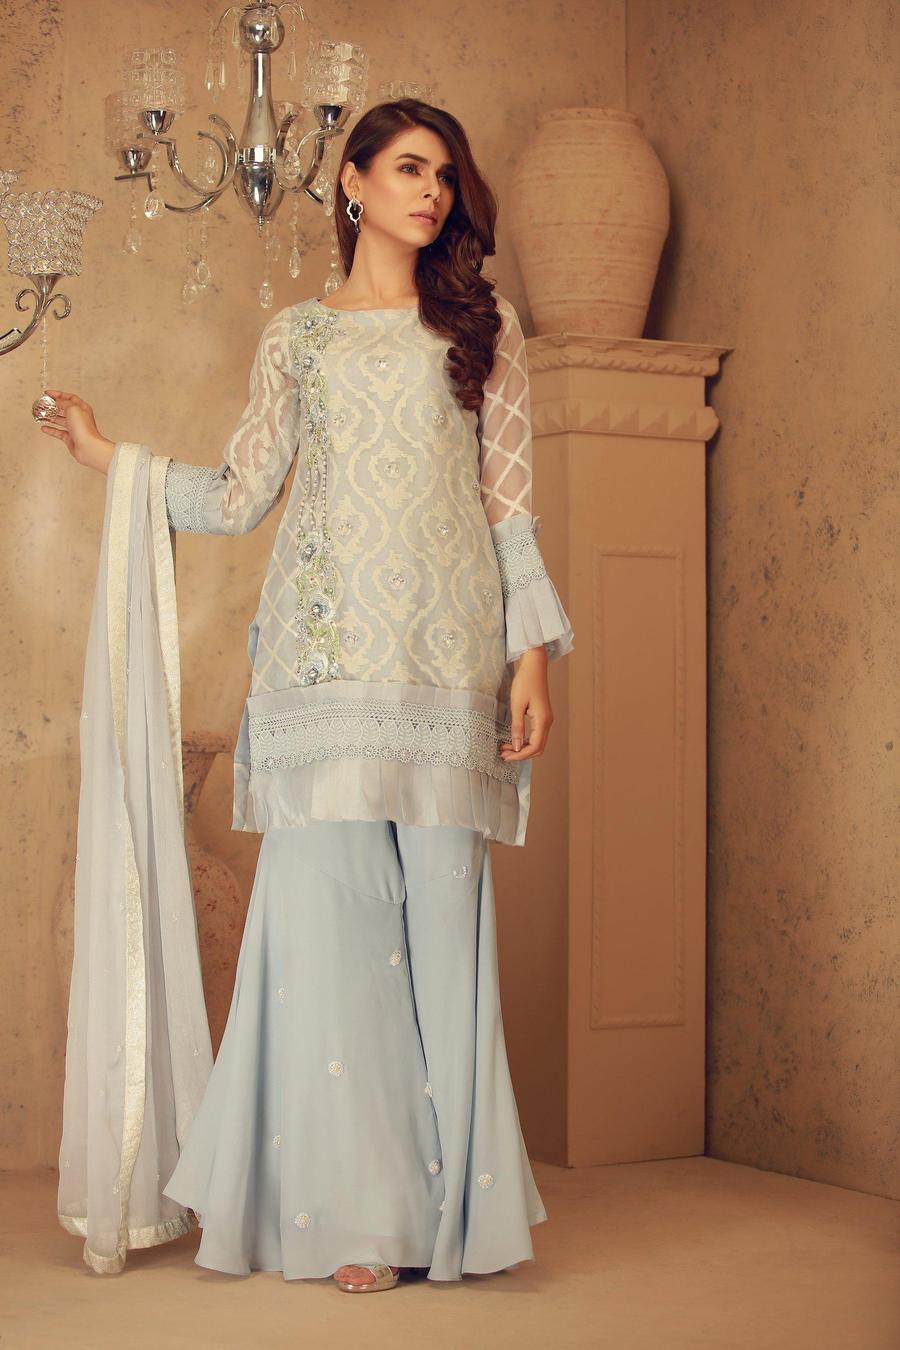 A Beautiful Sea Foam from Pakistani Party Dresses by Sarosh Salman in Chiffon Fabric